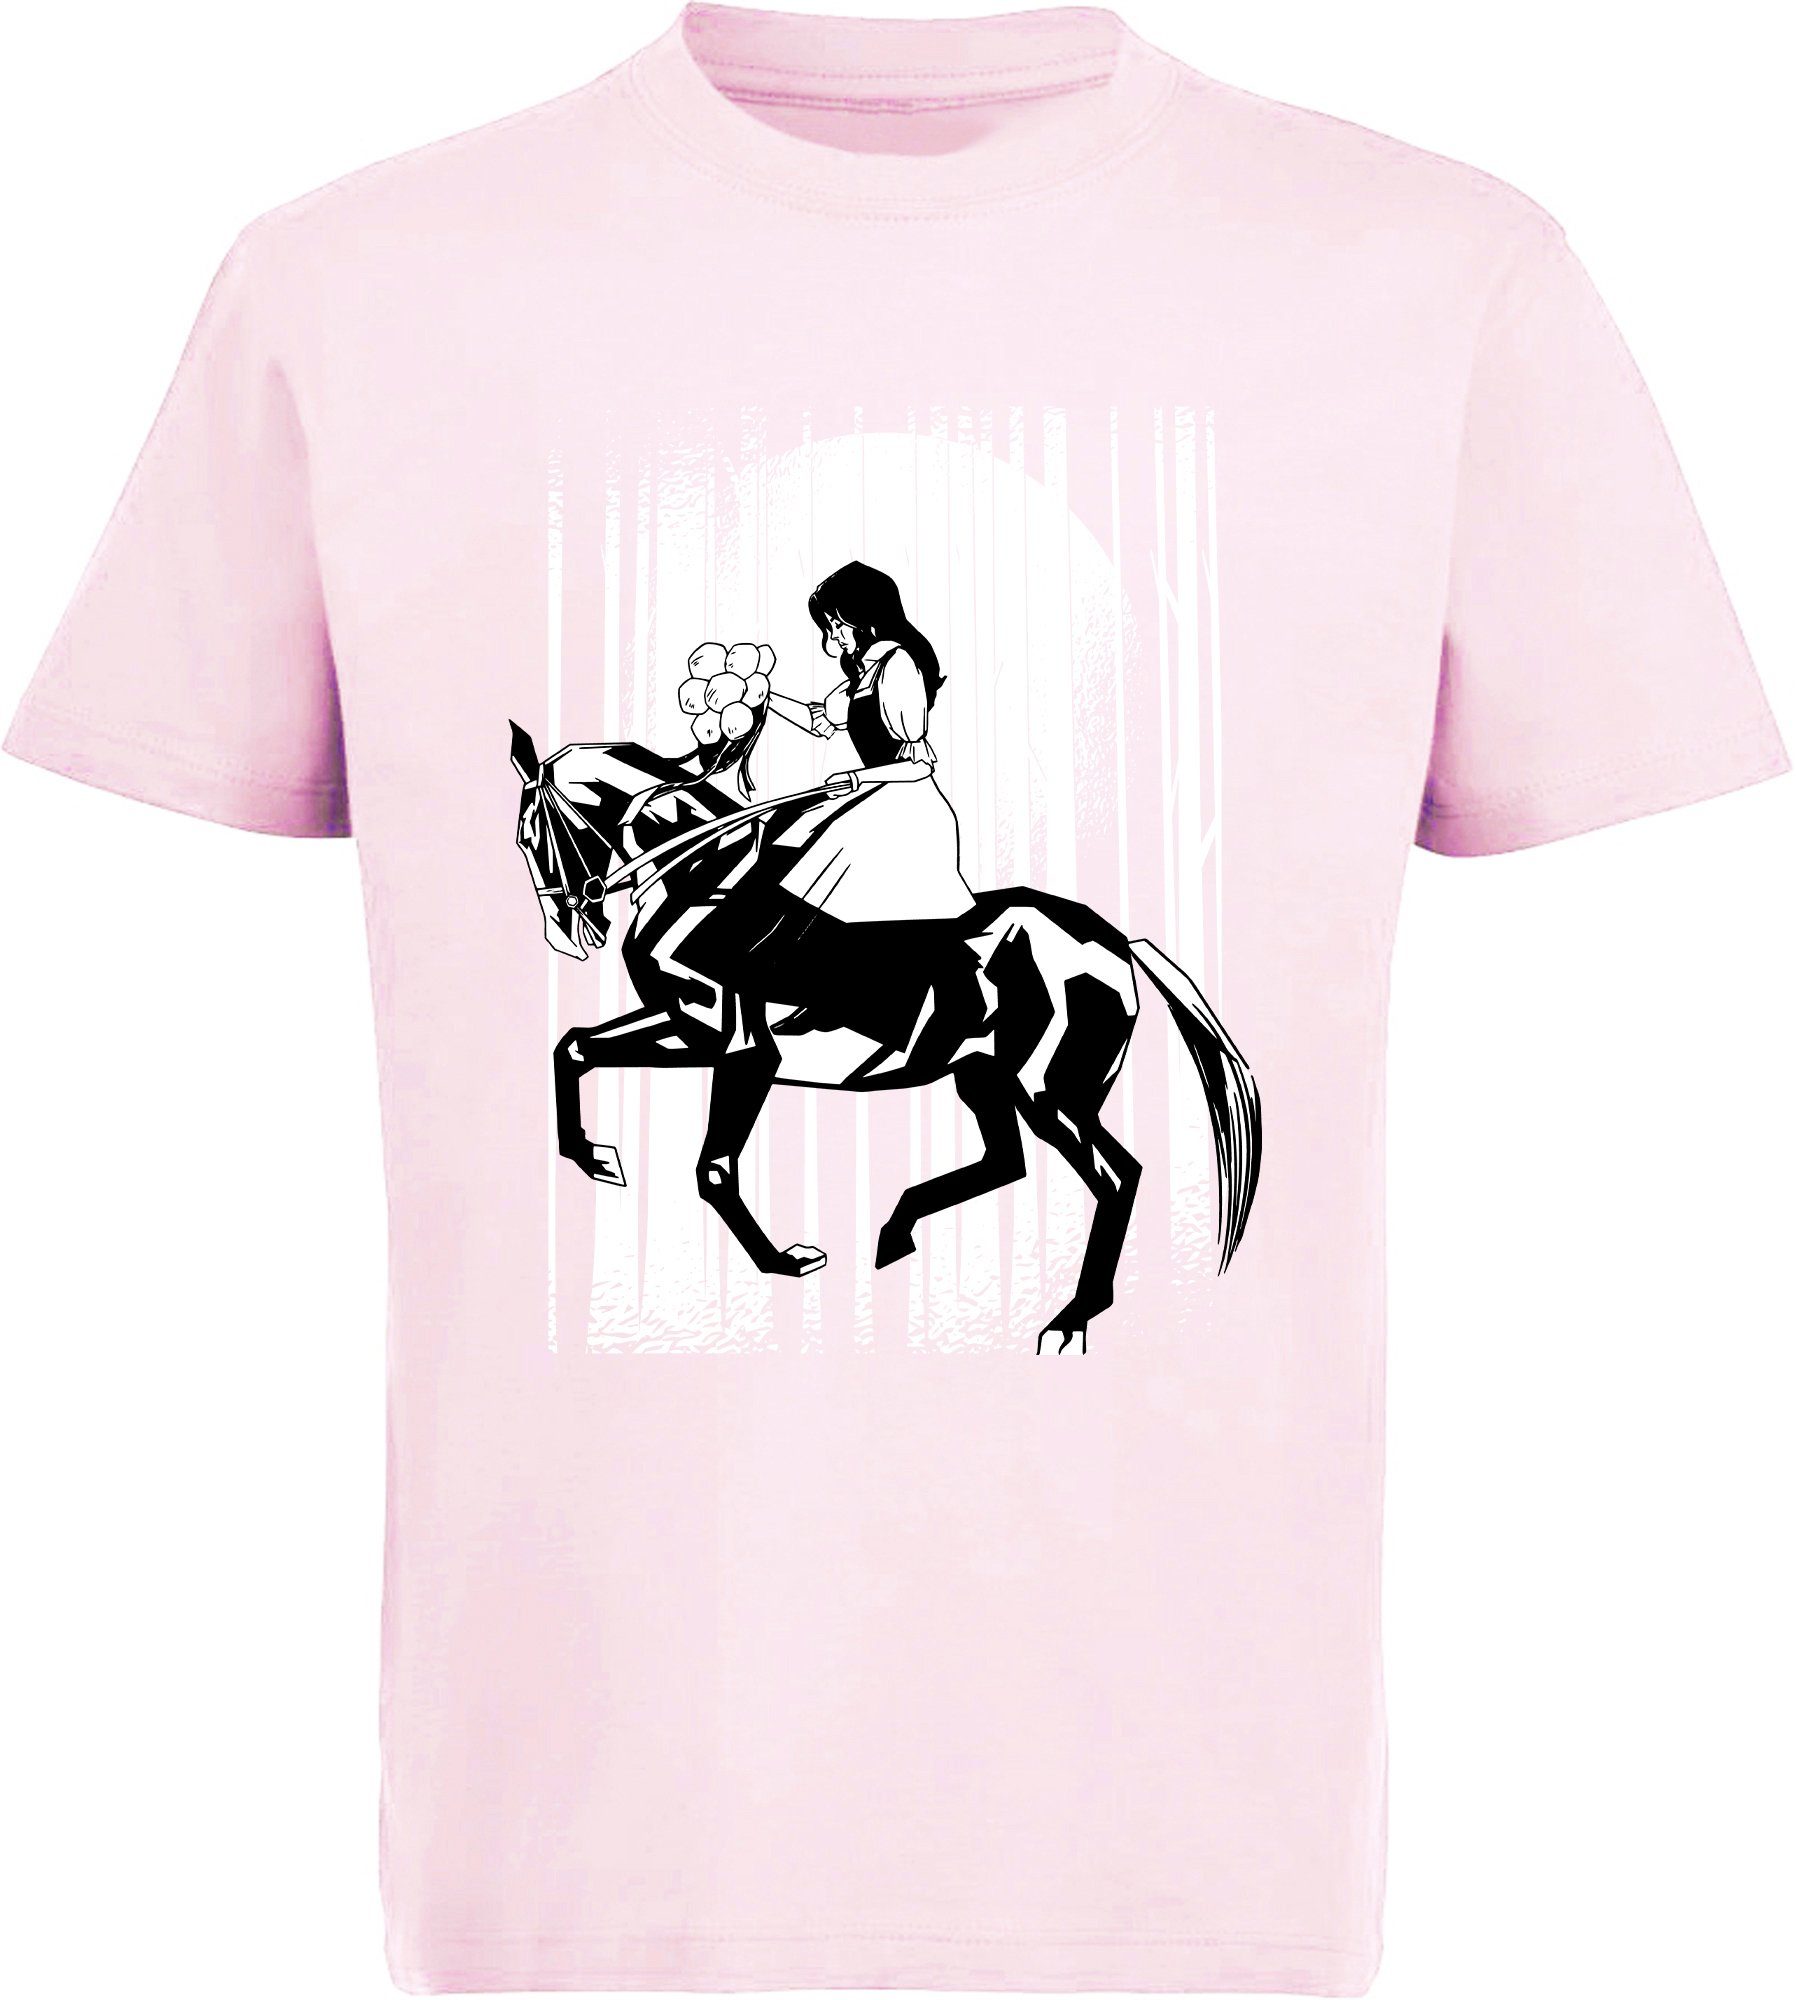 MyDesign24 Print-Shirt bedrucktes Mädchen T-Shirt berittenes Pferd Baumwollshirt mit Aufdruck, i138 rosa